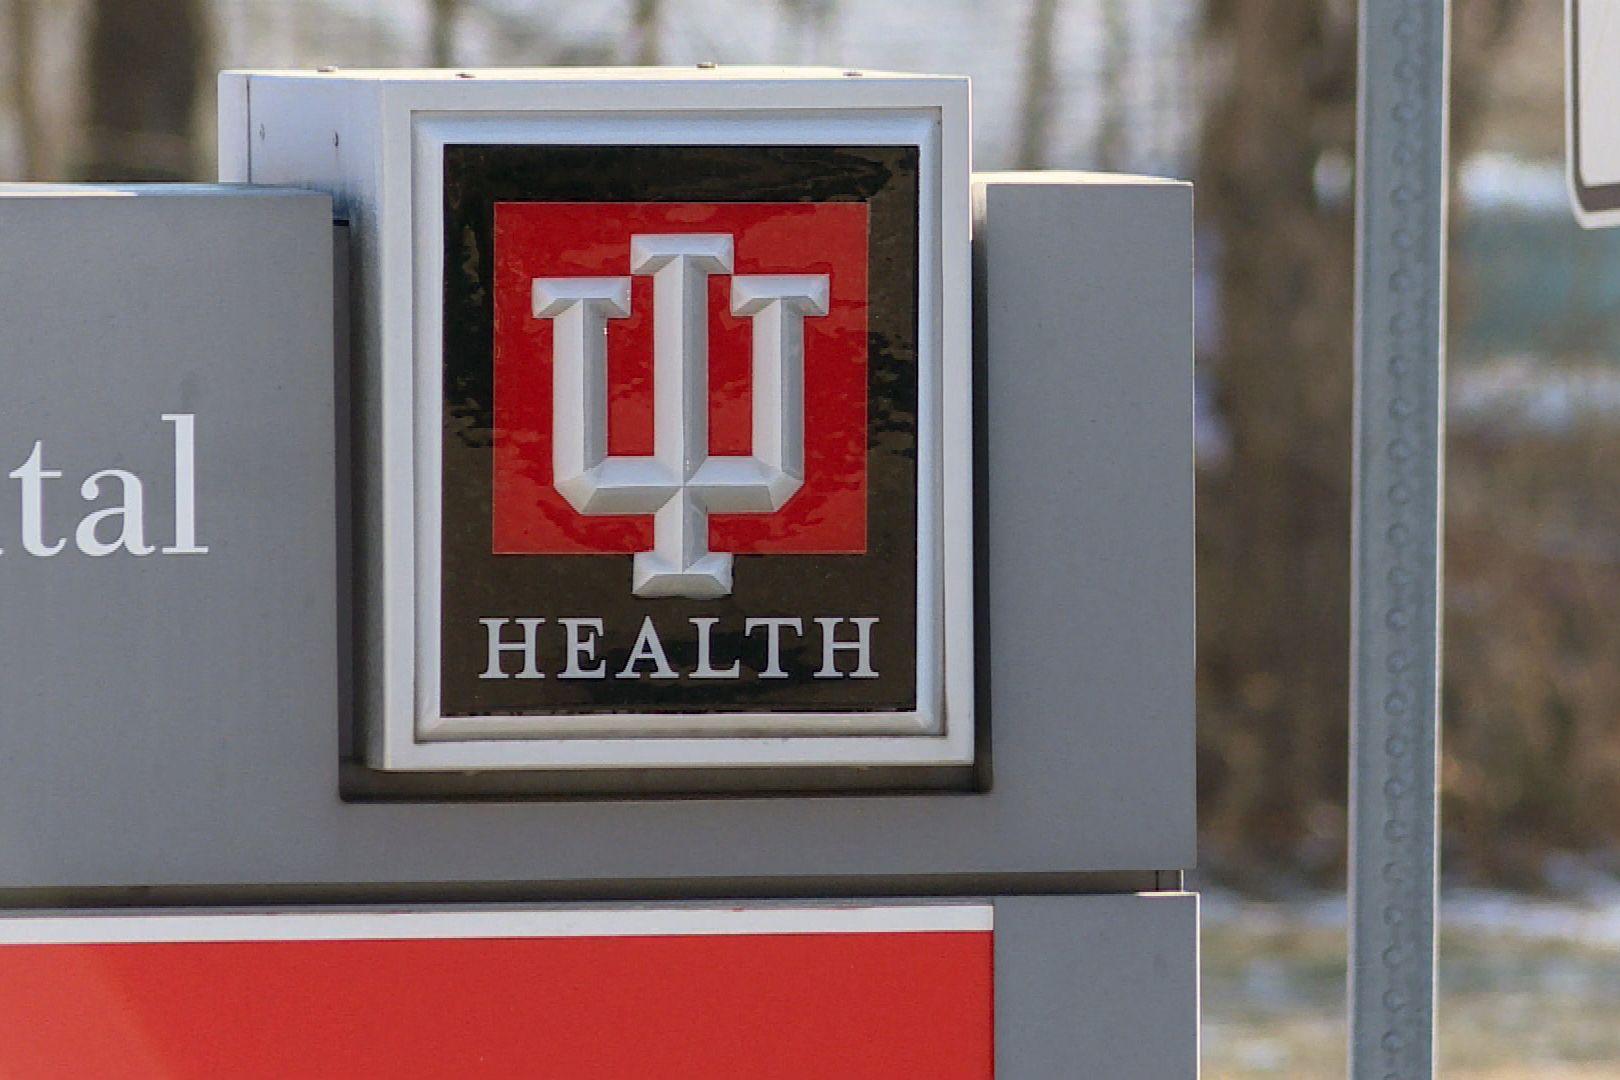 IU Health Logo - IU Health Set To Open New $9M Robotic Supply Warehouse. News